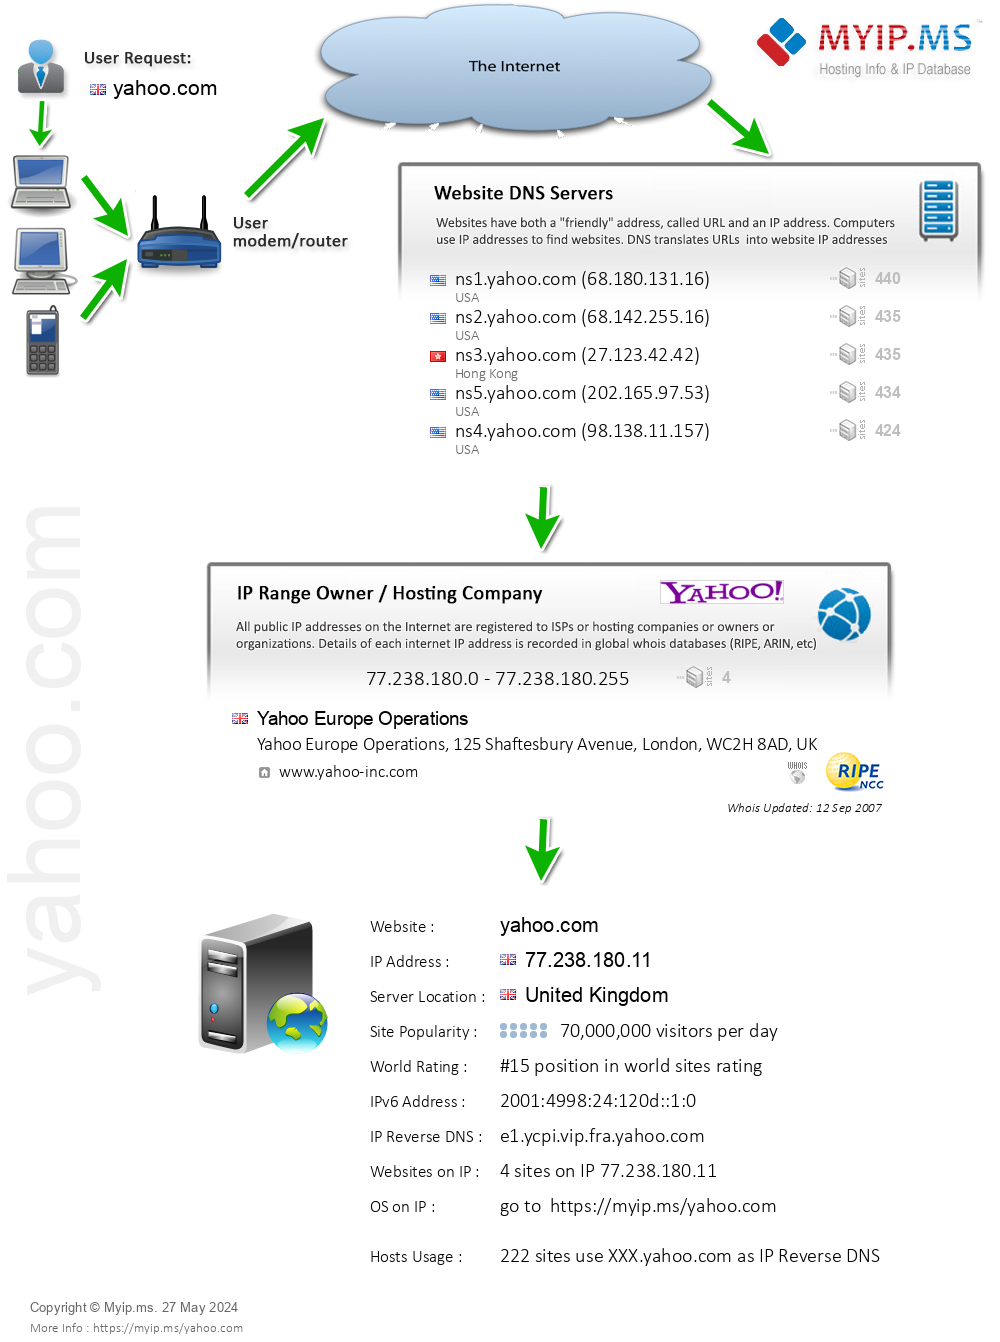 Yahoo.com - Website Hosting Visual IP Diagram